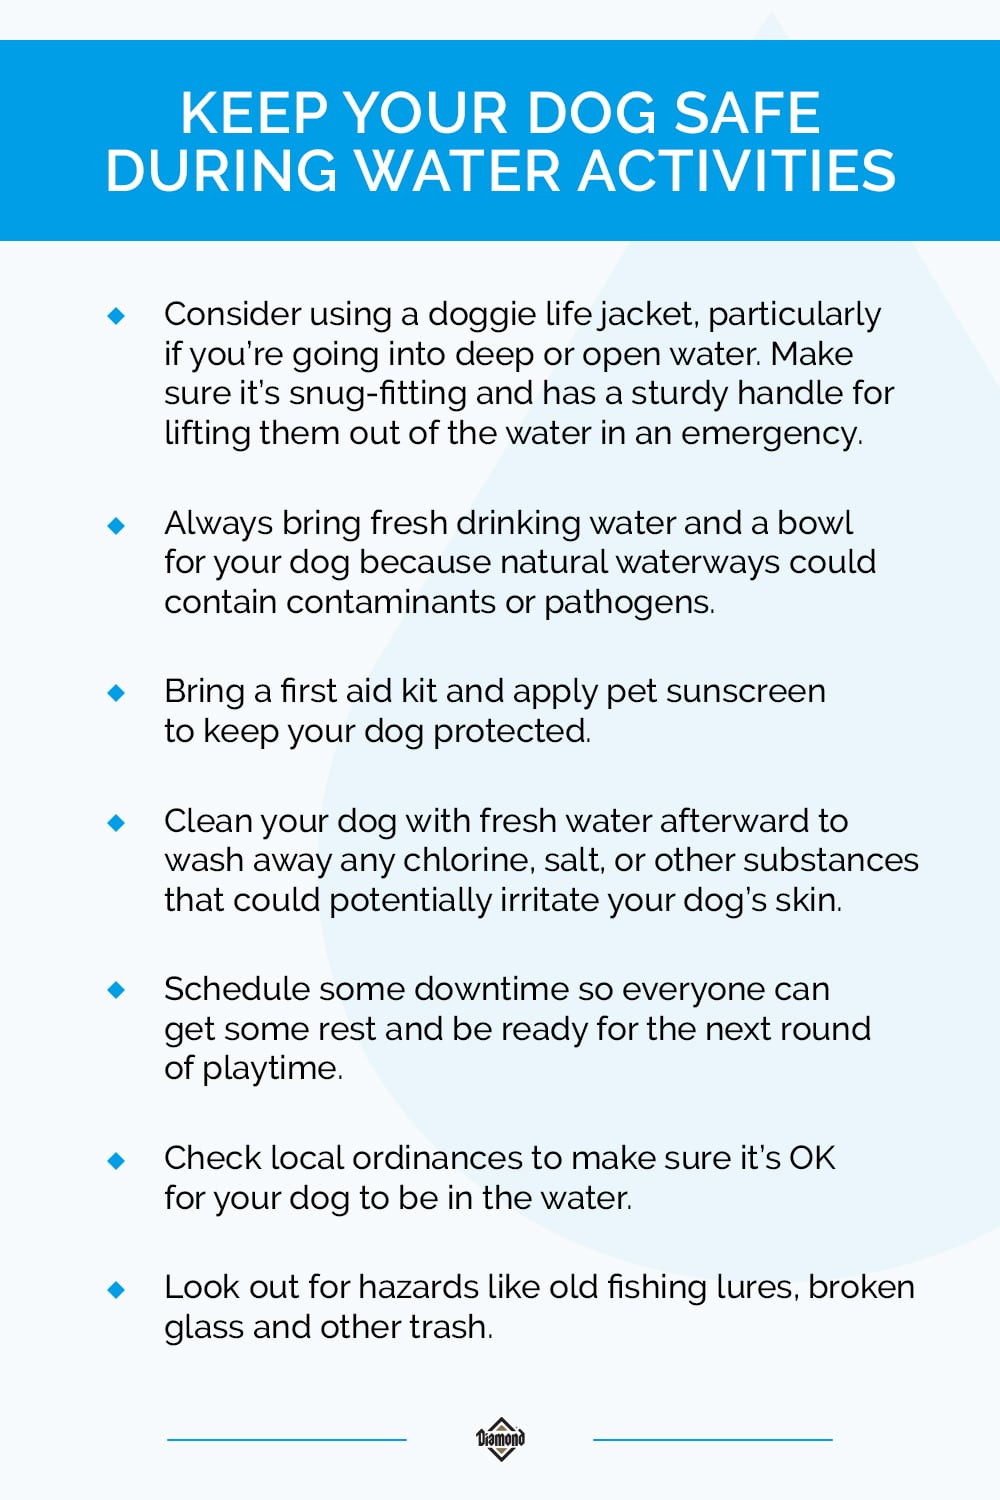 Keep Your Dog Safe During Water Activities Infographic | Diamond Pet Foods